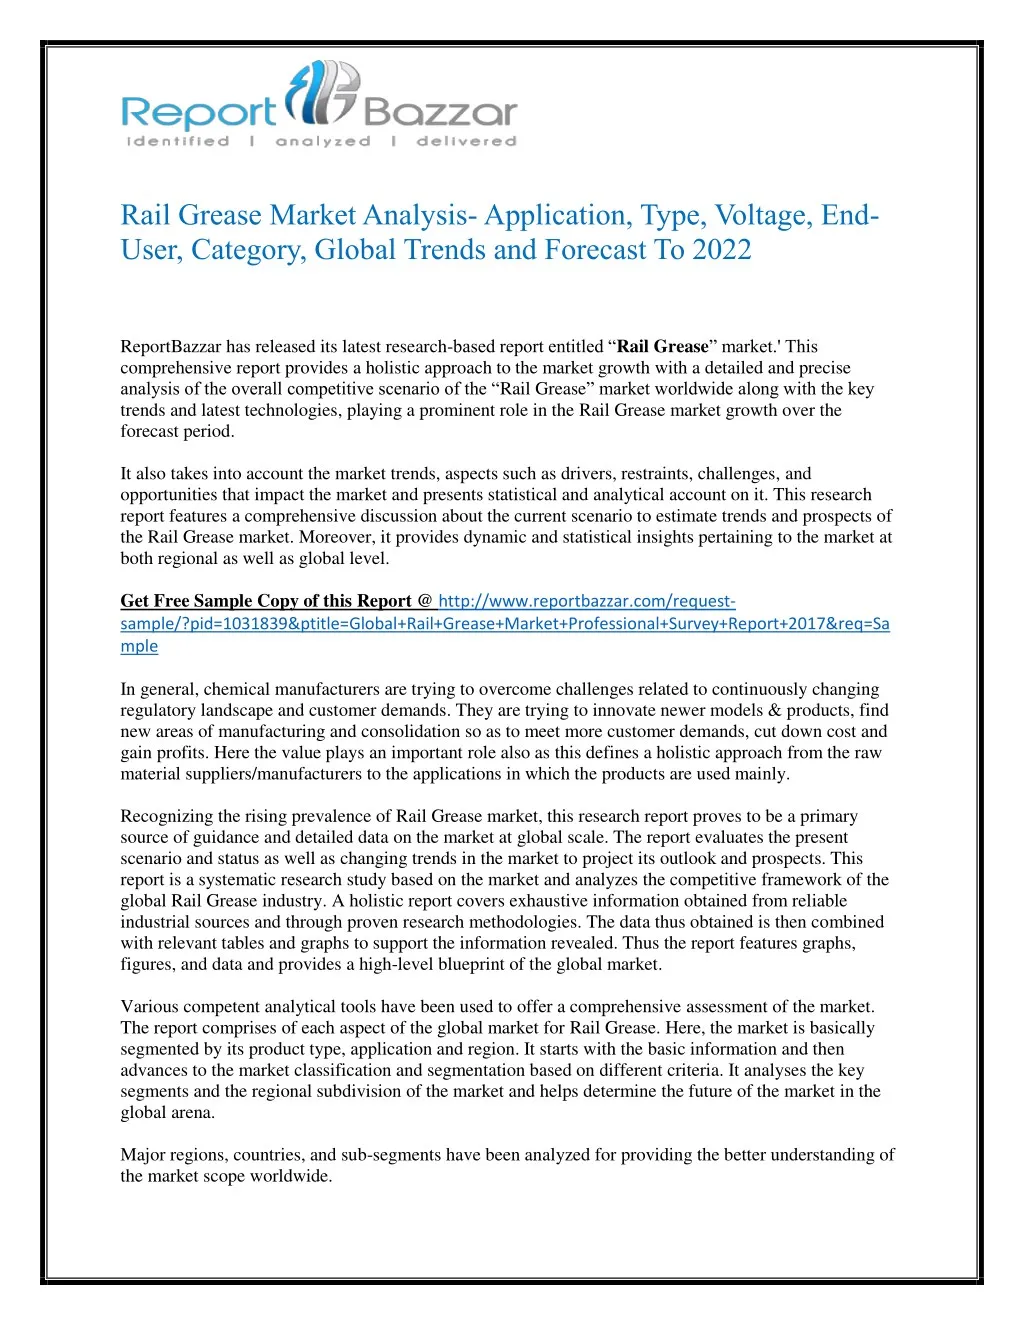 rail grease market analysis application type